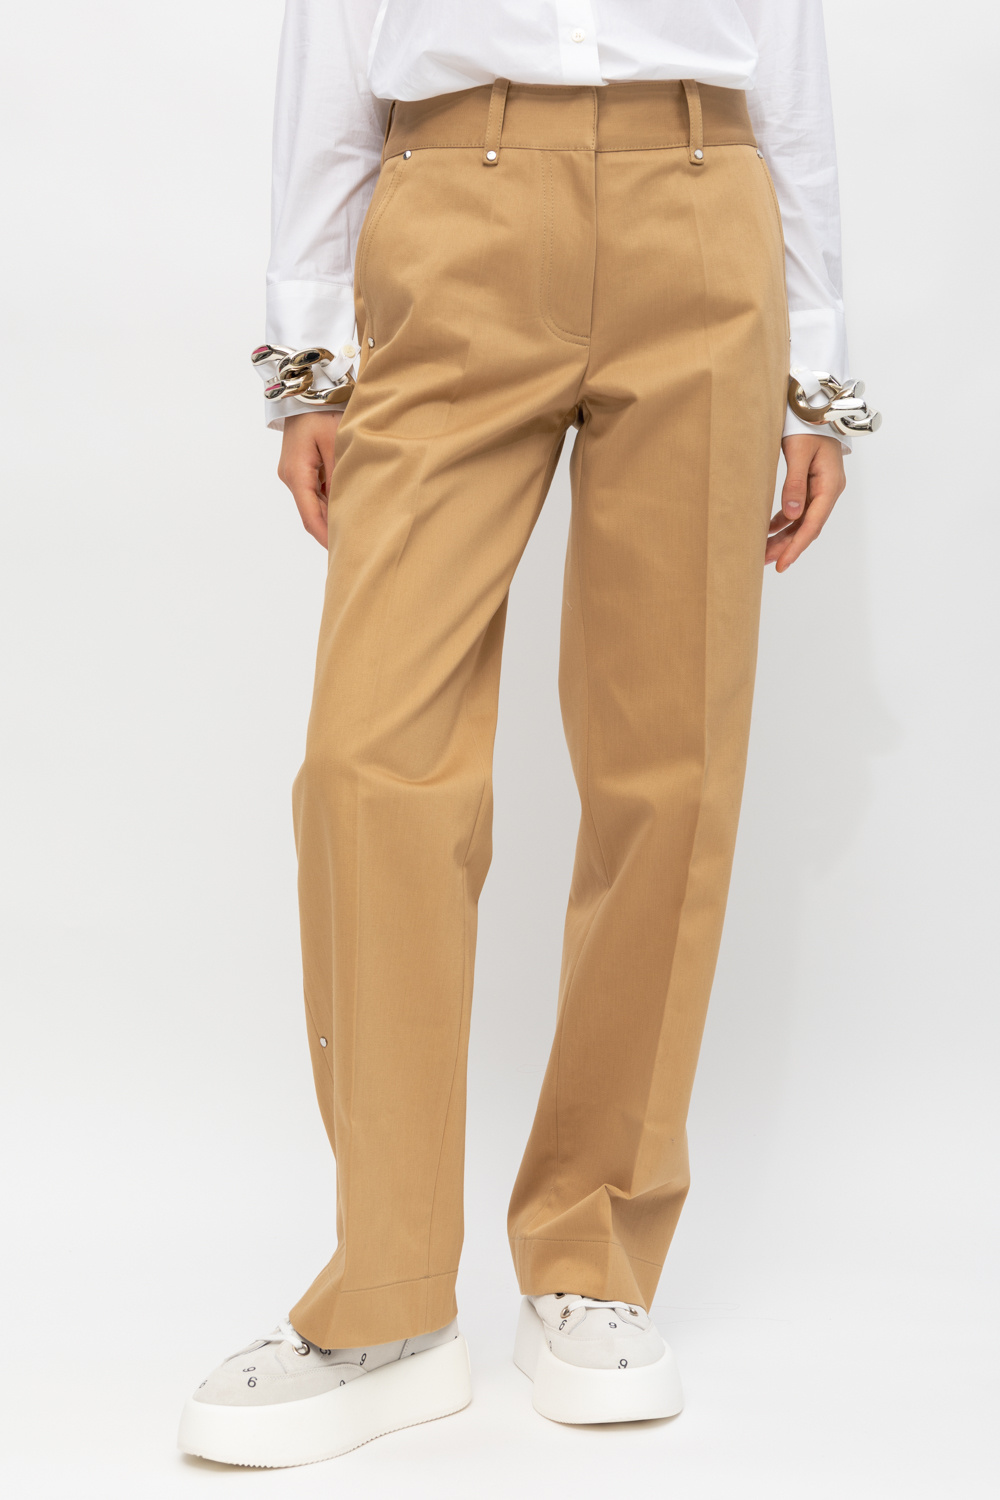 JW Anderson Pleat-front Slinky trousers